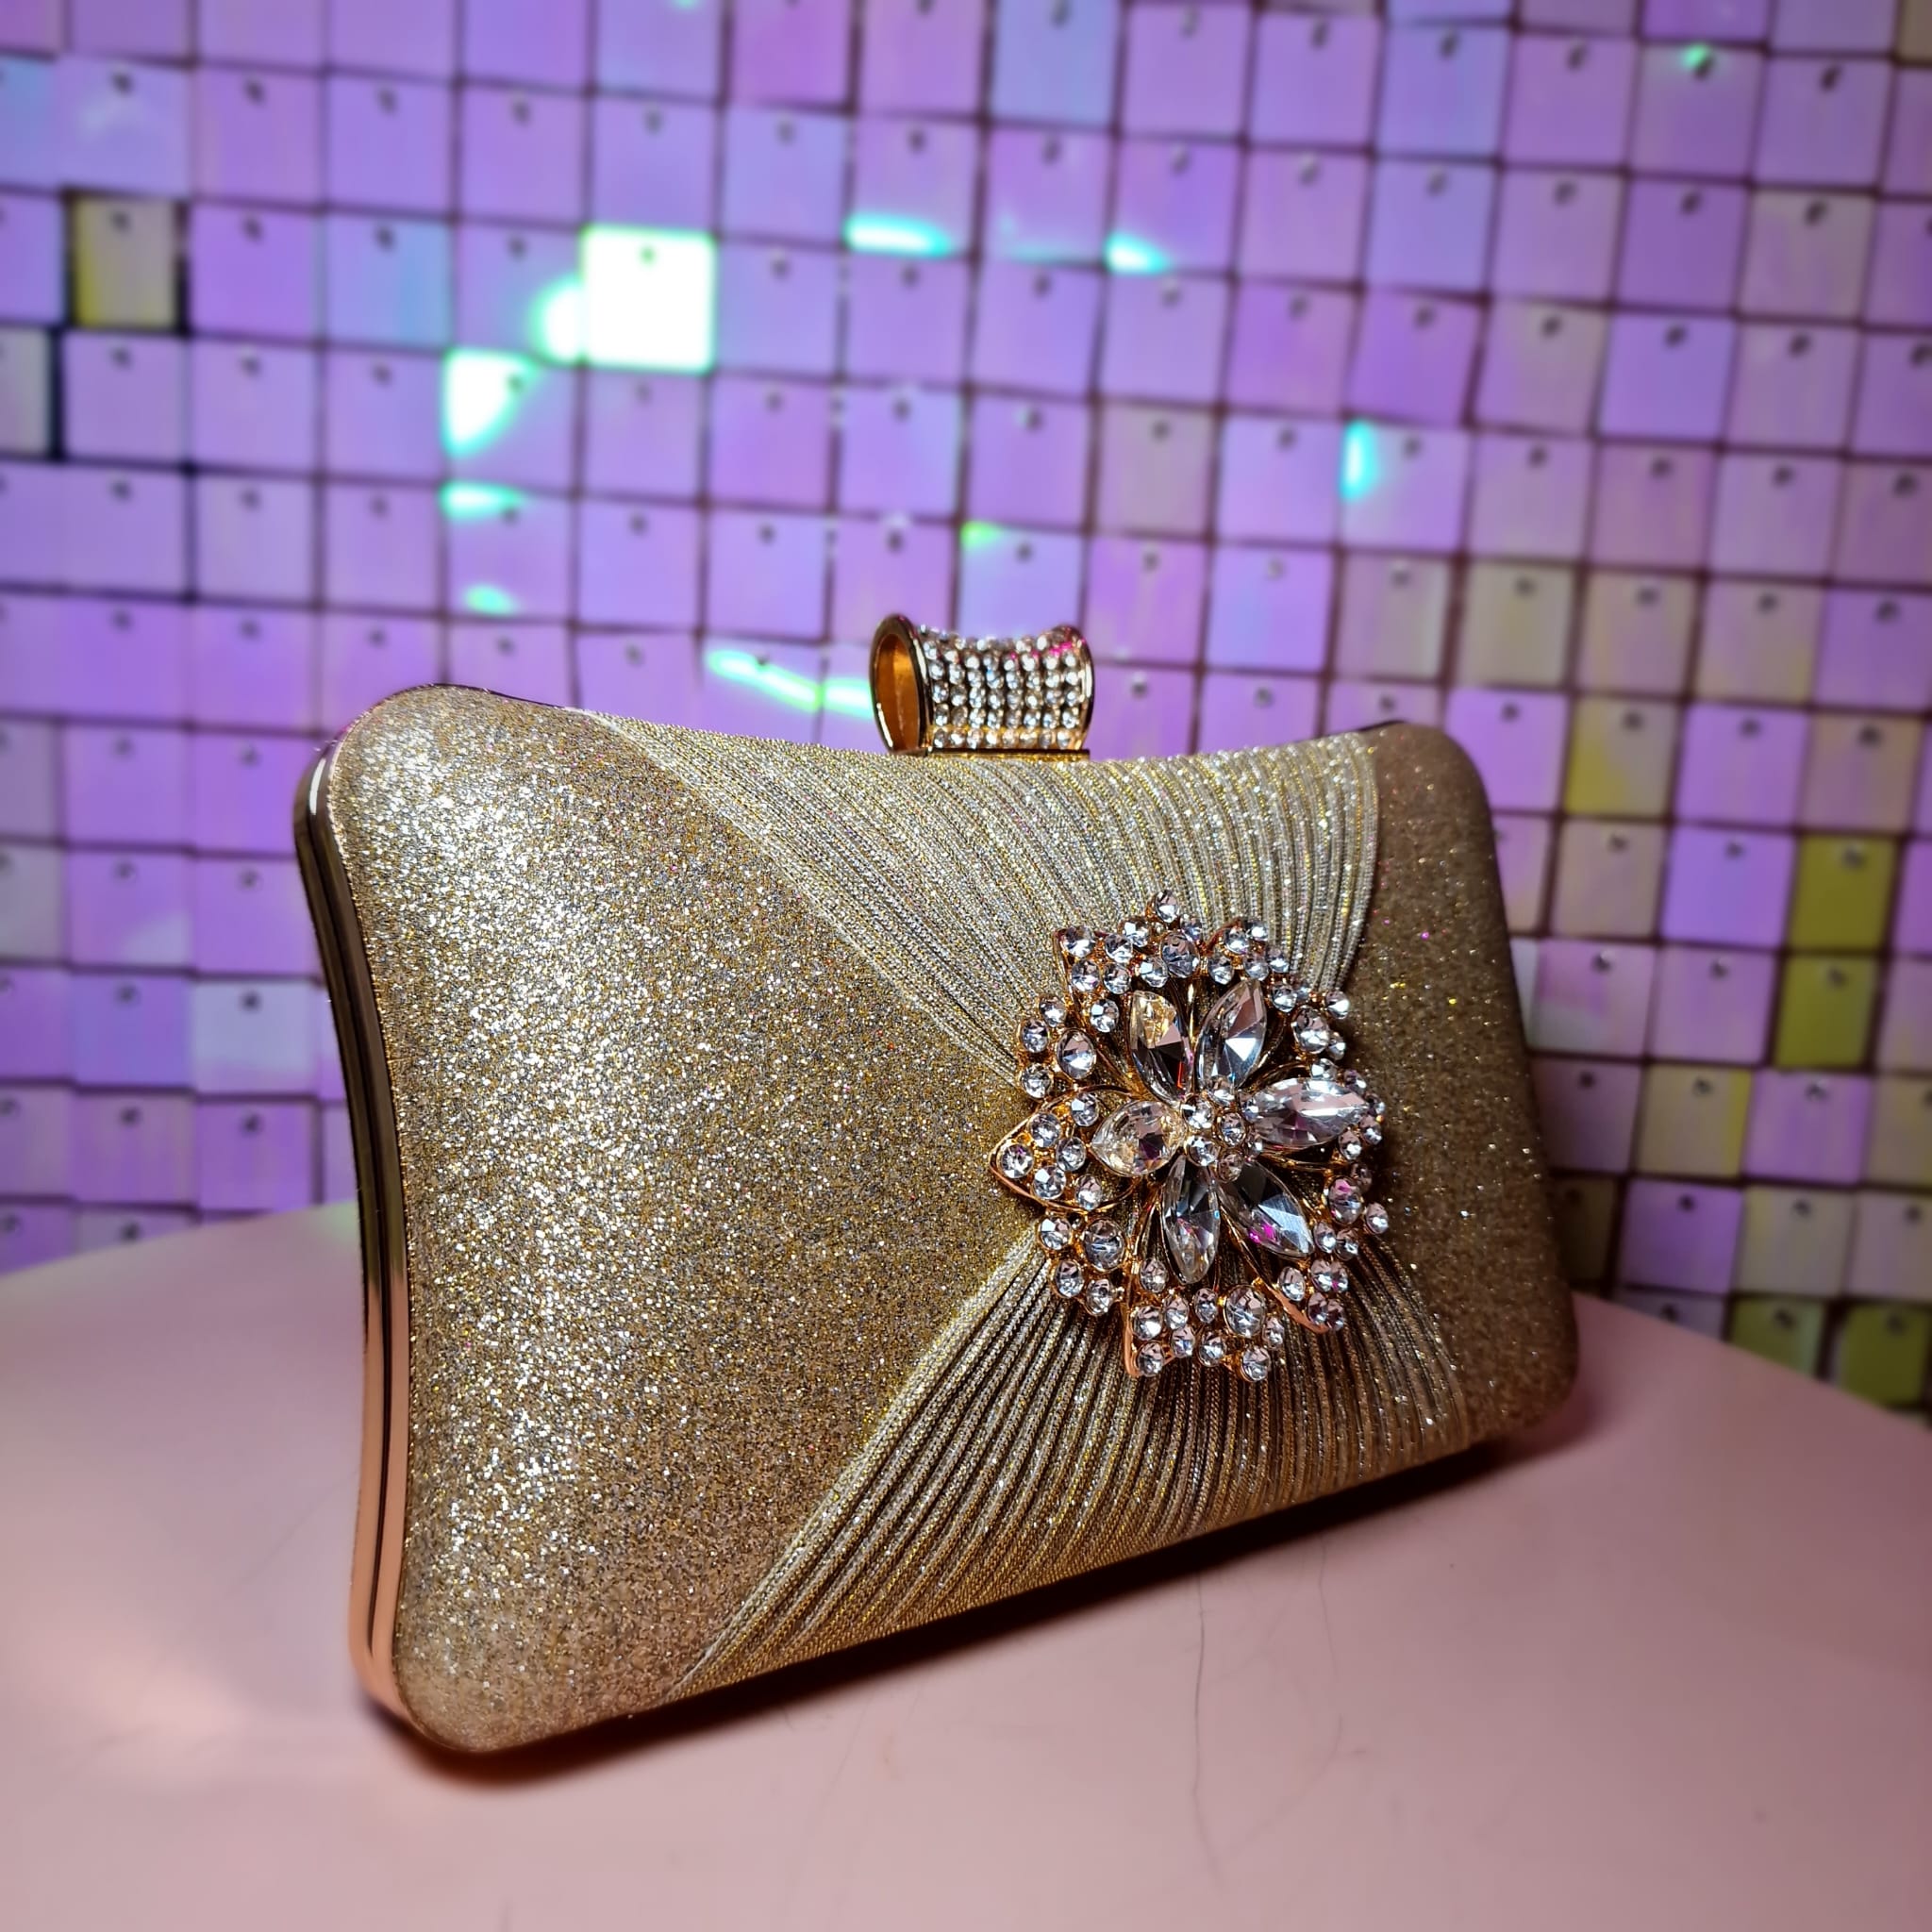 Rose Gold With Flower Detail Clutch Handbag